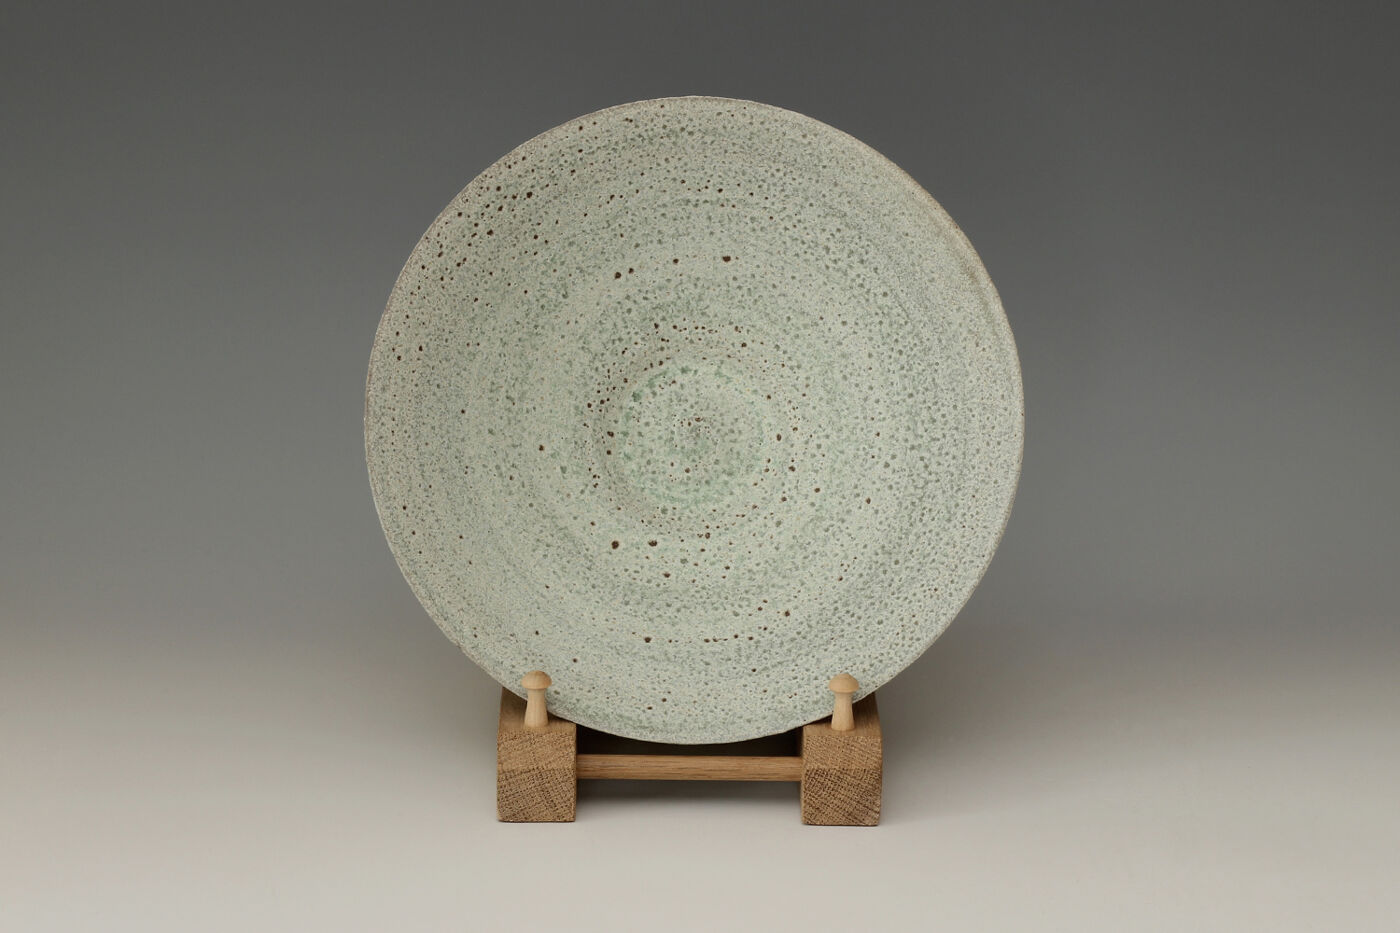 Peter Wills Ceramic Textured Pale Green Bowl 178